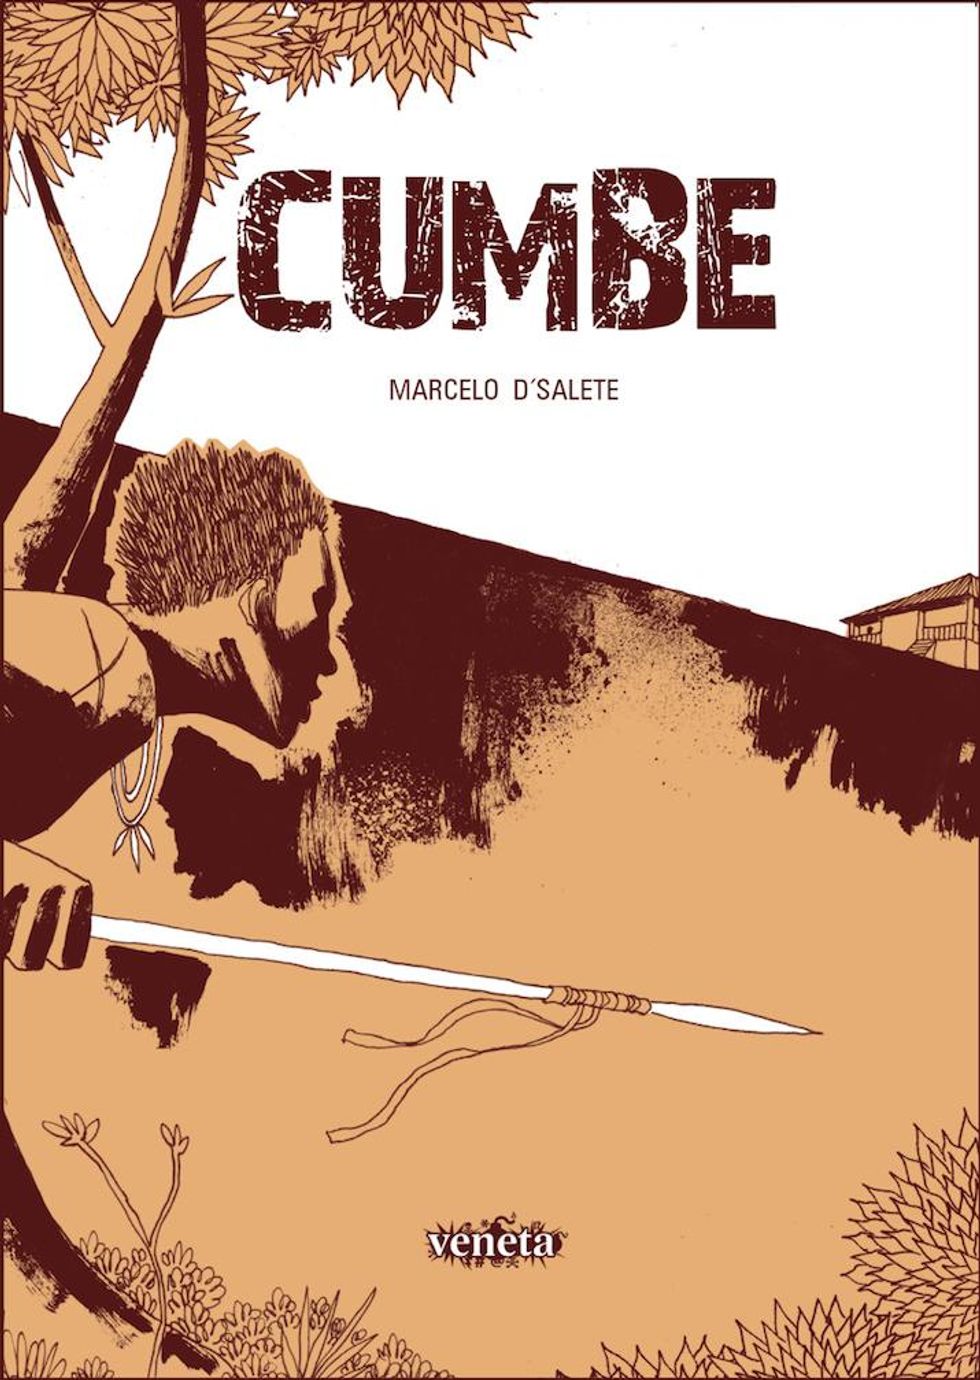 Graphic Novel Gives Voice To Brazil's Black Slaves